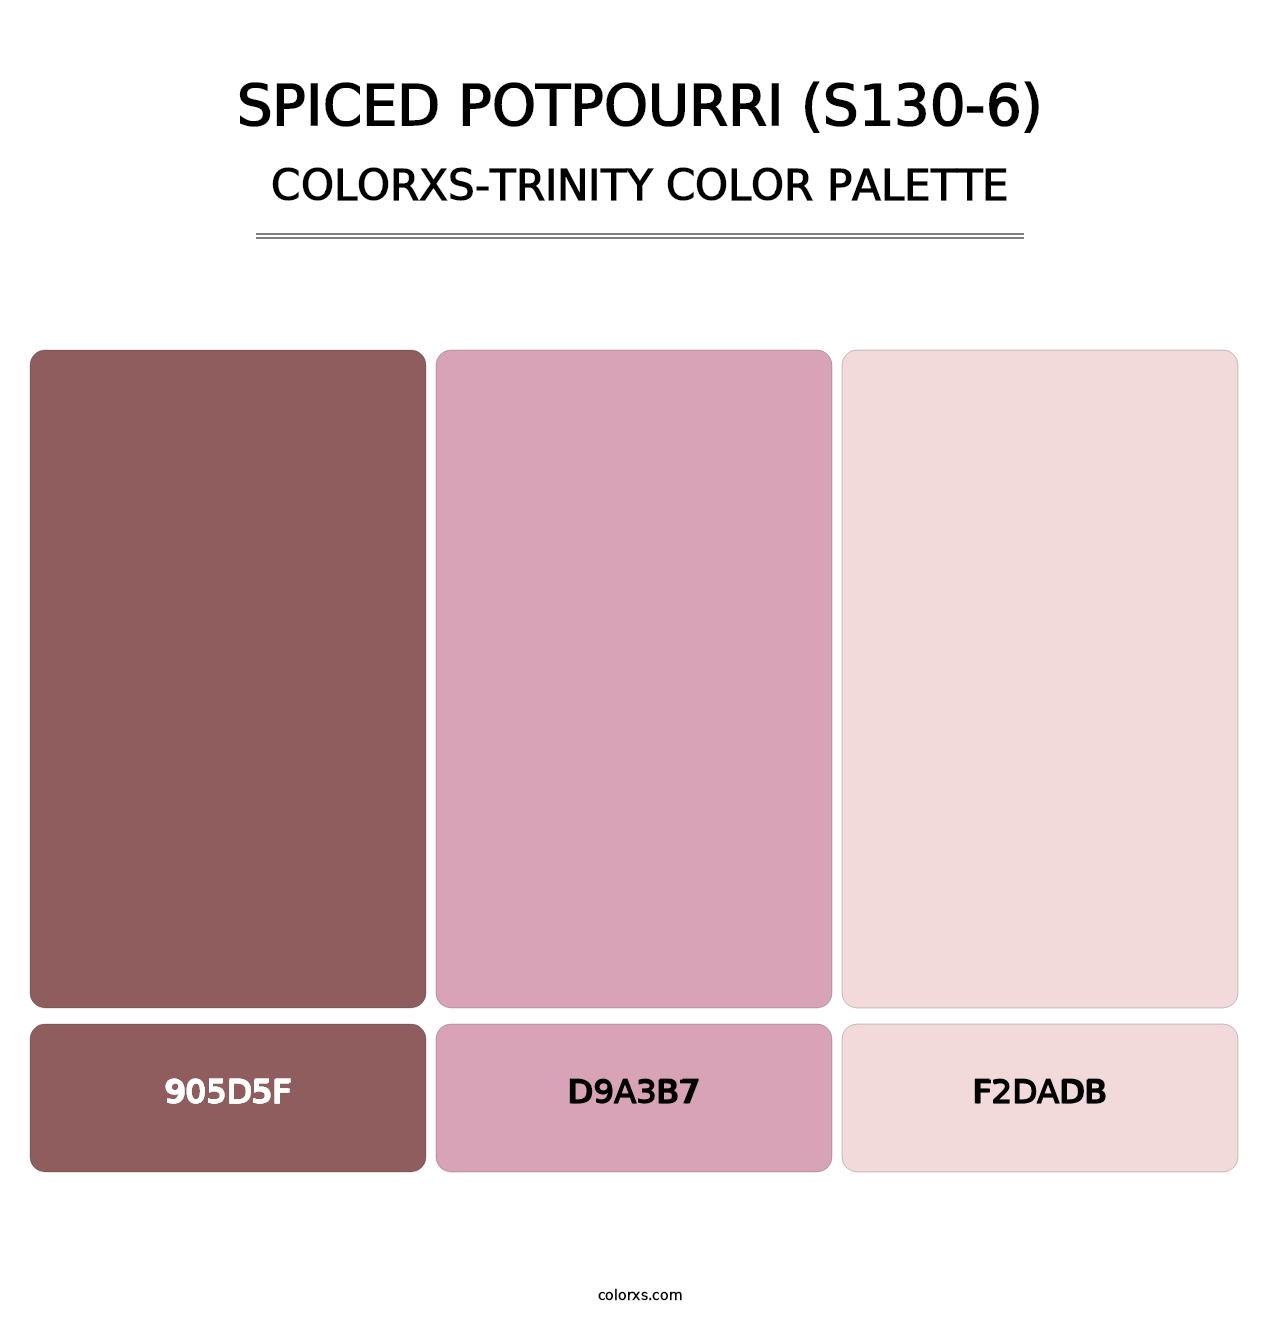 Spiced Potpourri (S130-6) - Colorxs Trinity Palette